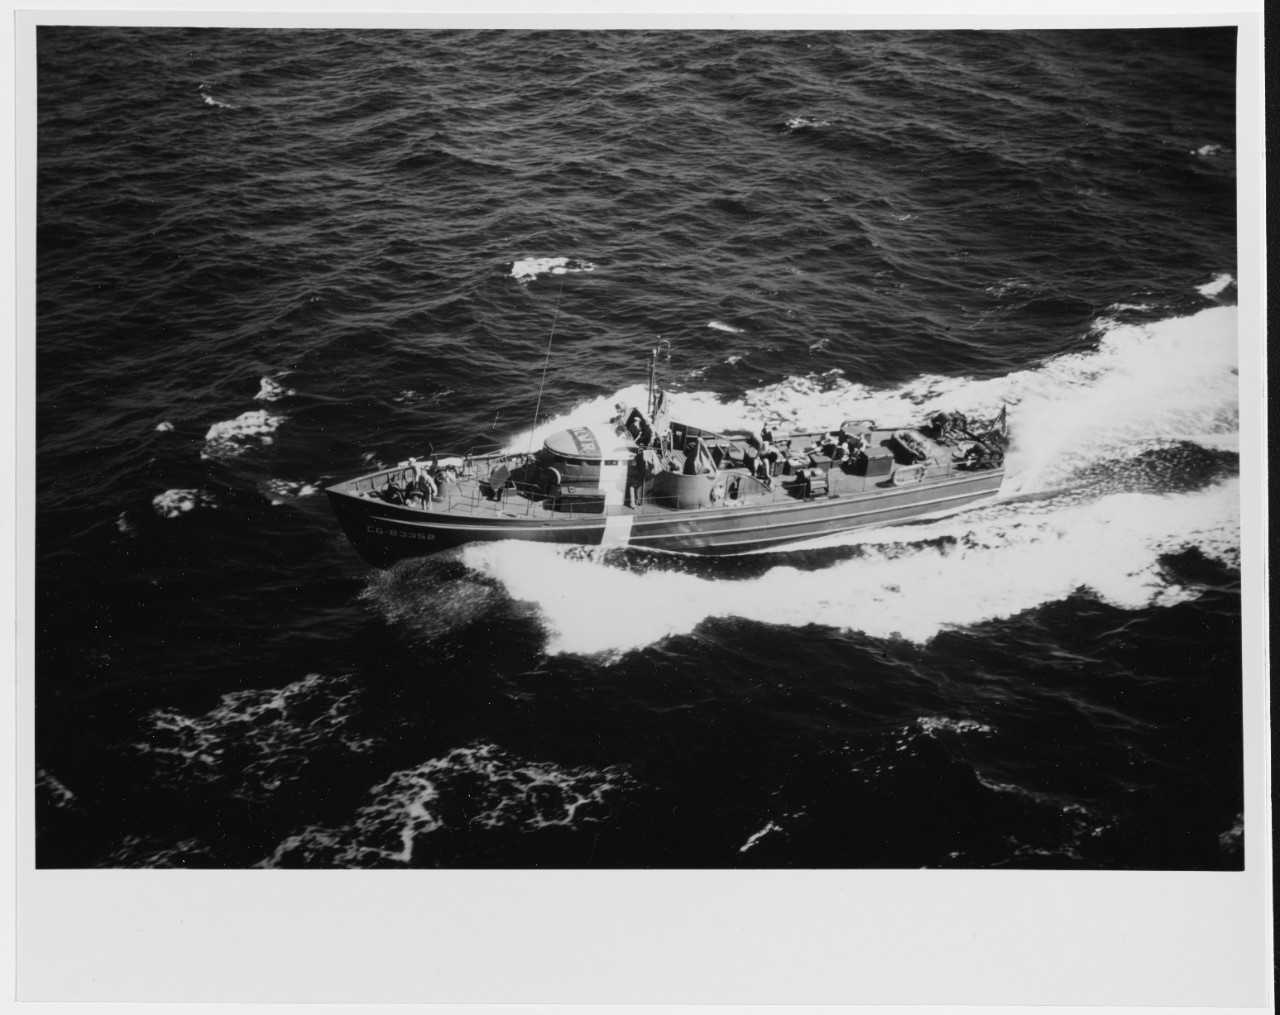 USCGC 83352 (83' patrol boat)